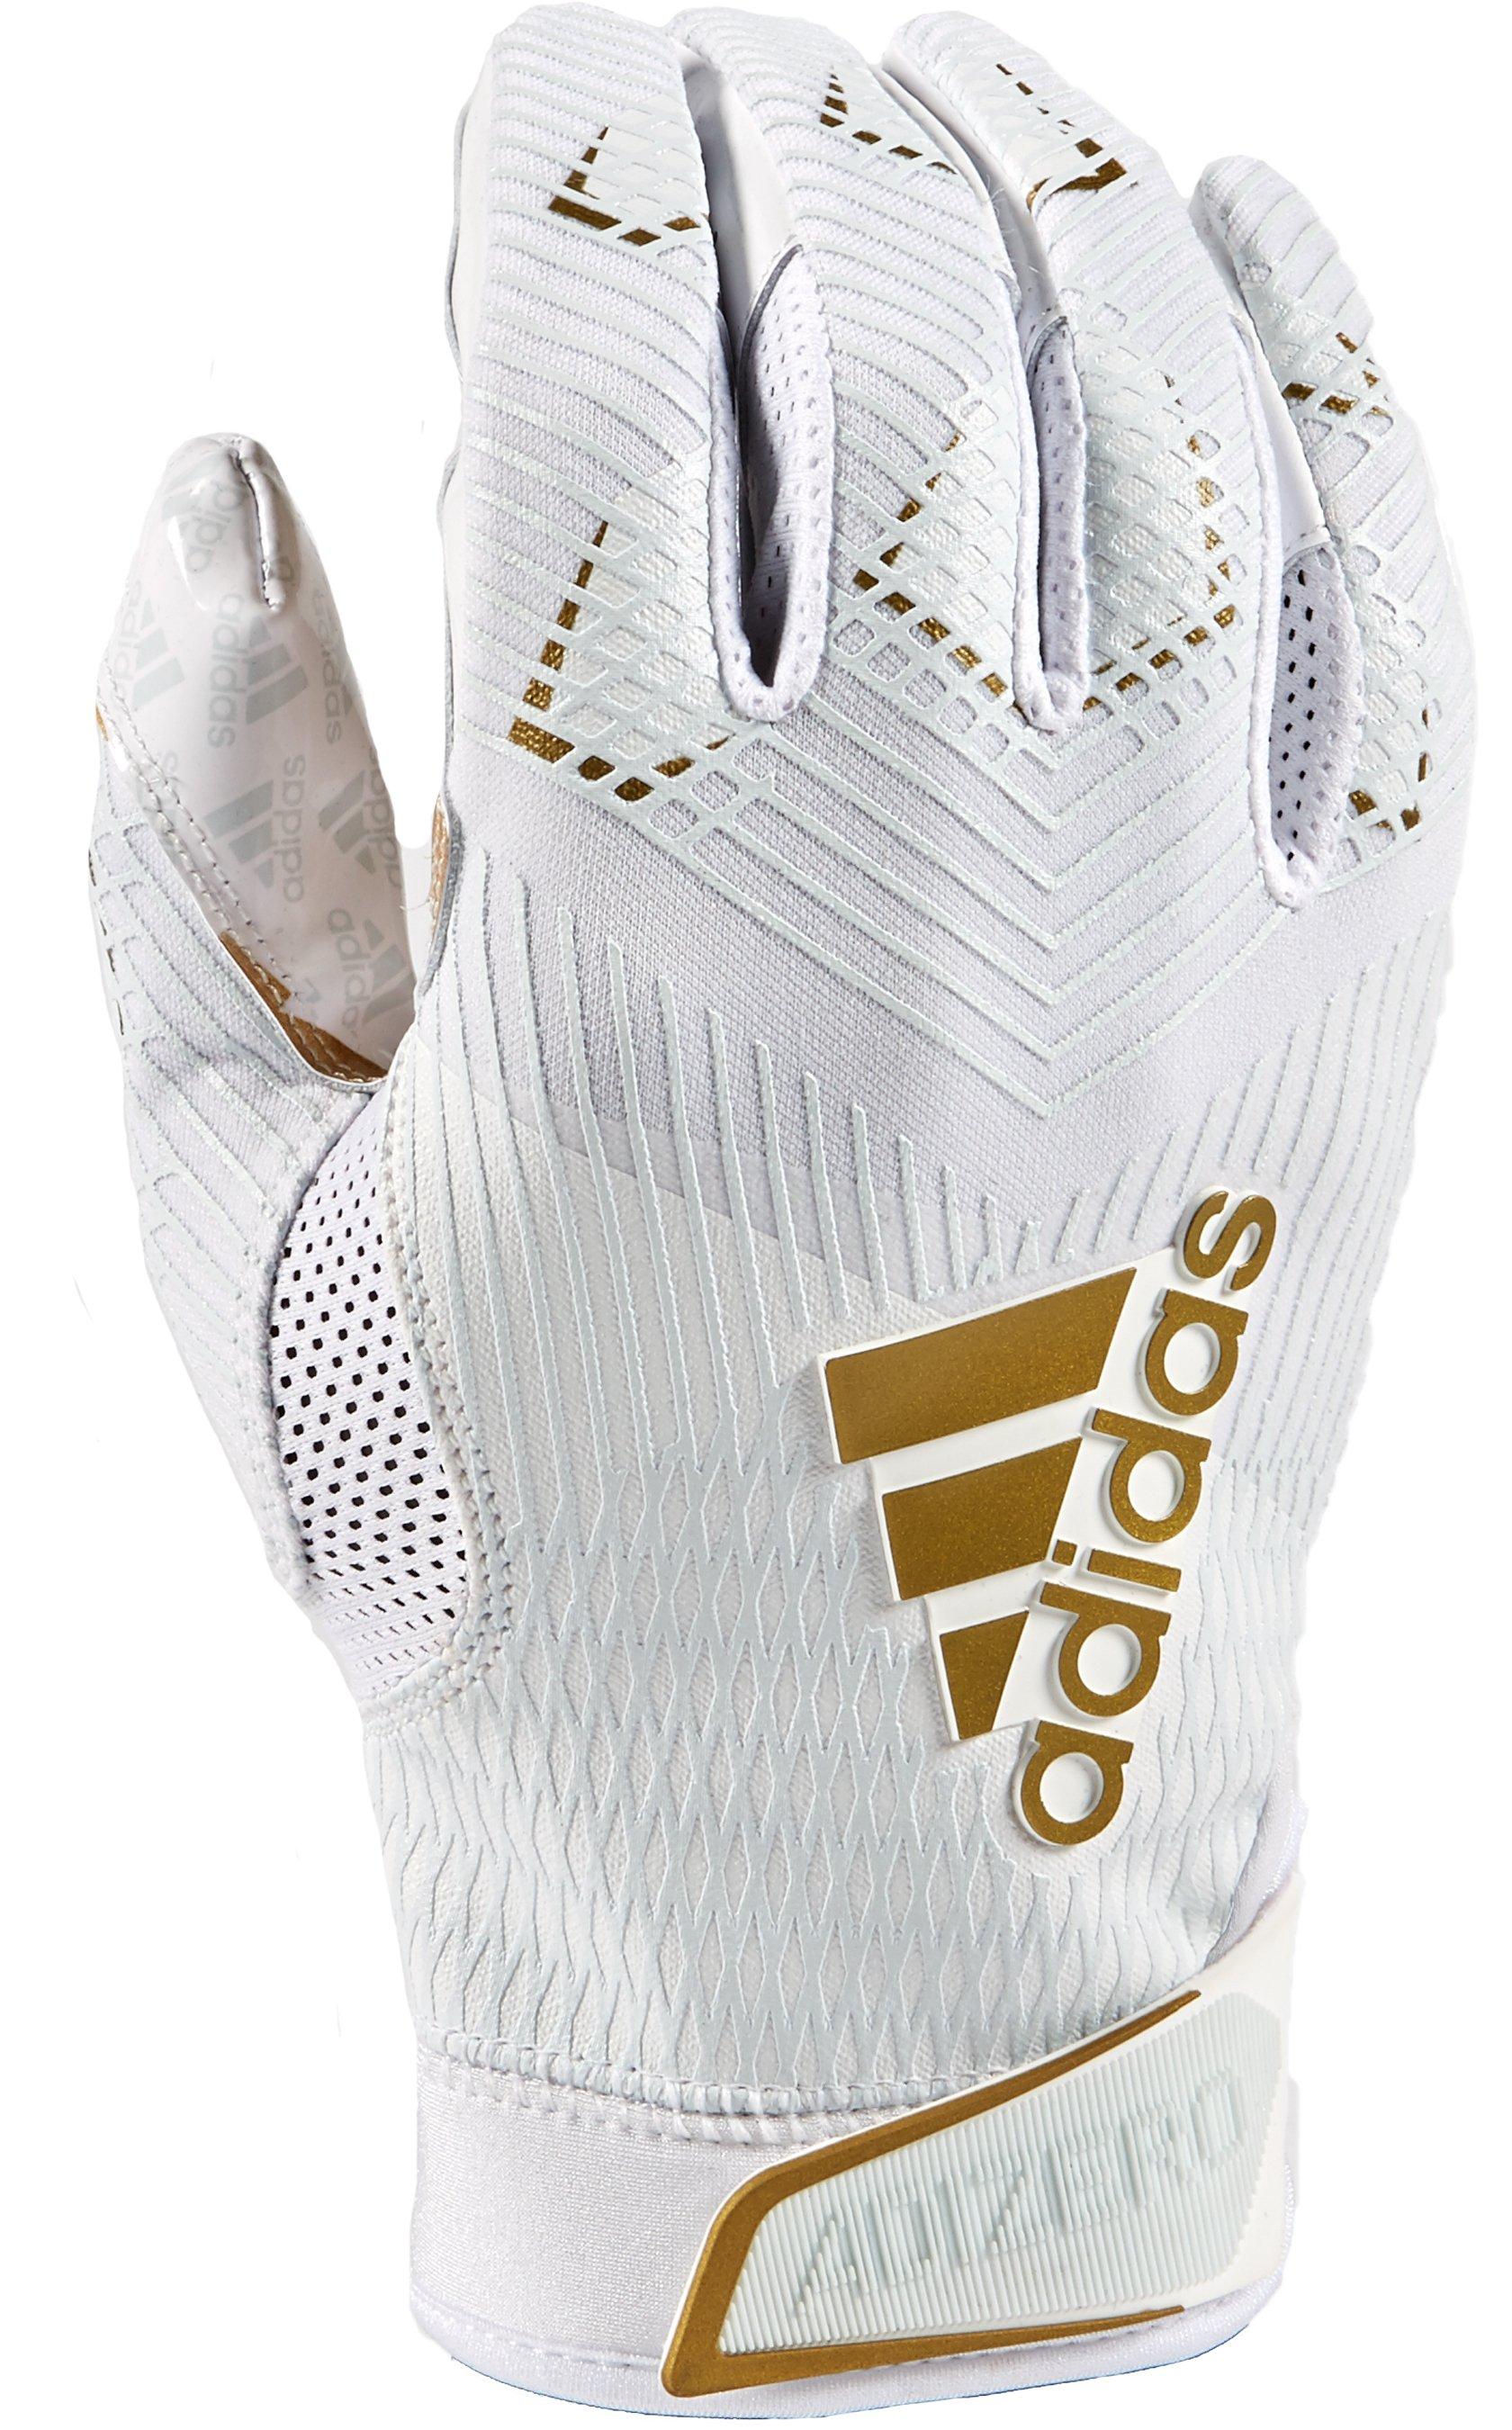 adizero receiver gloves